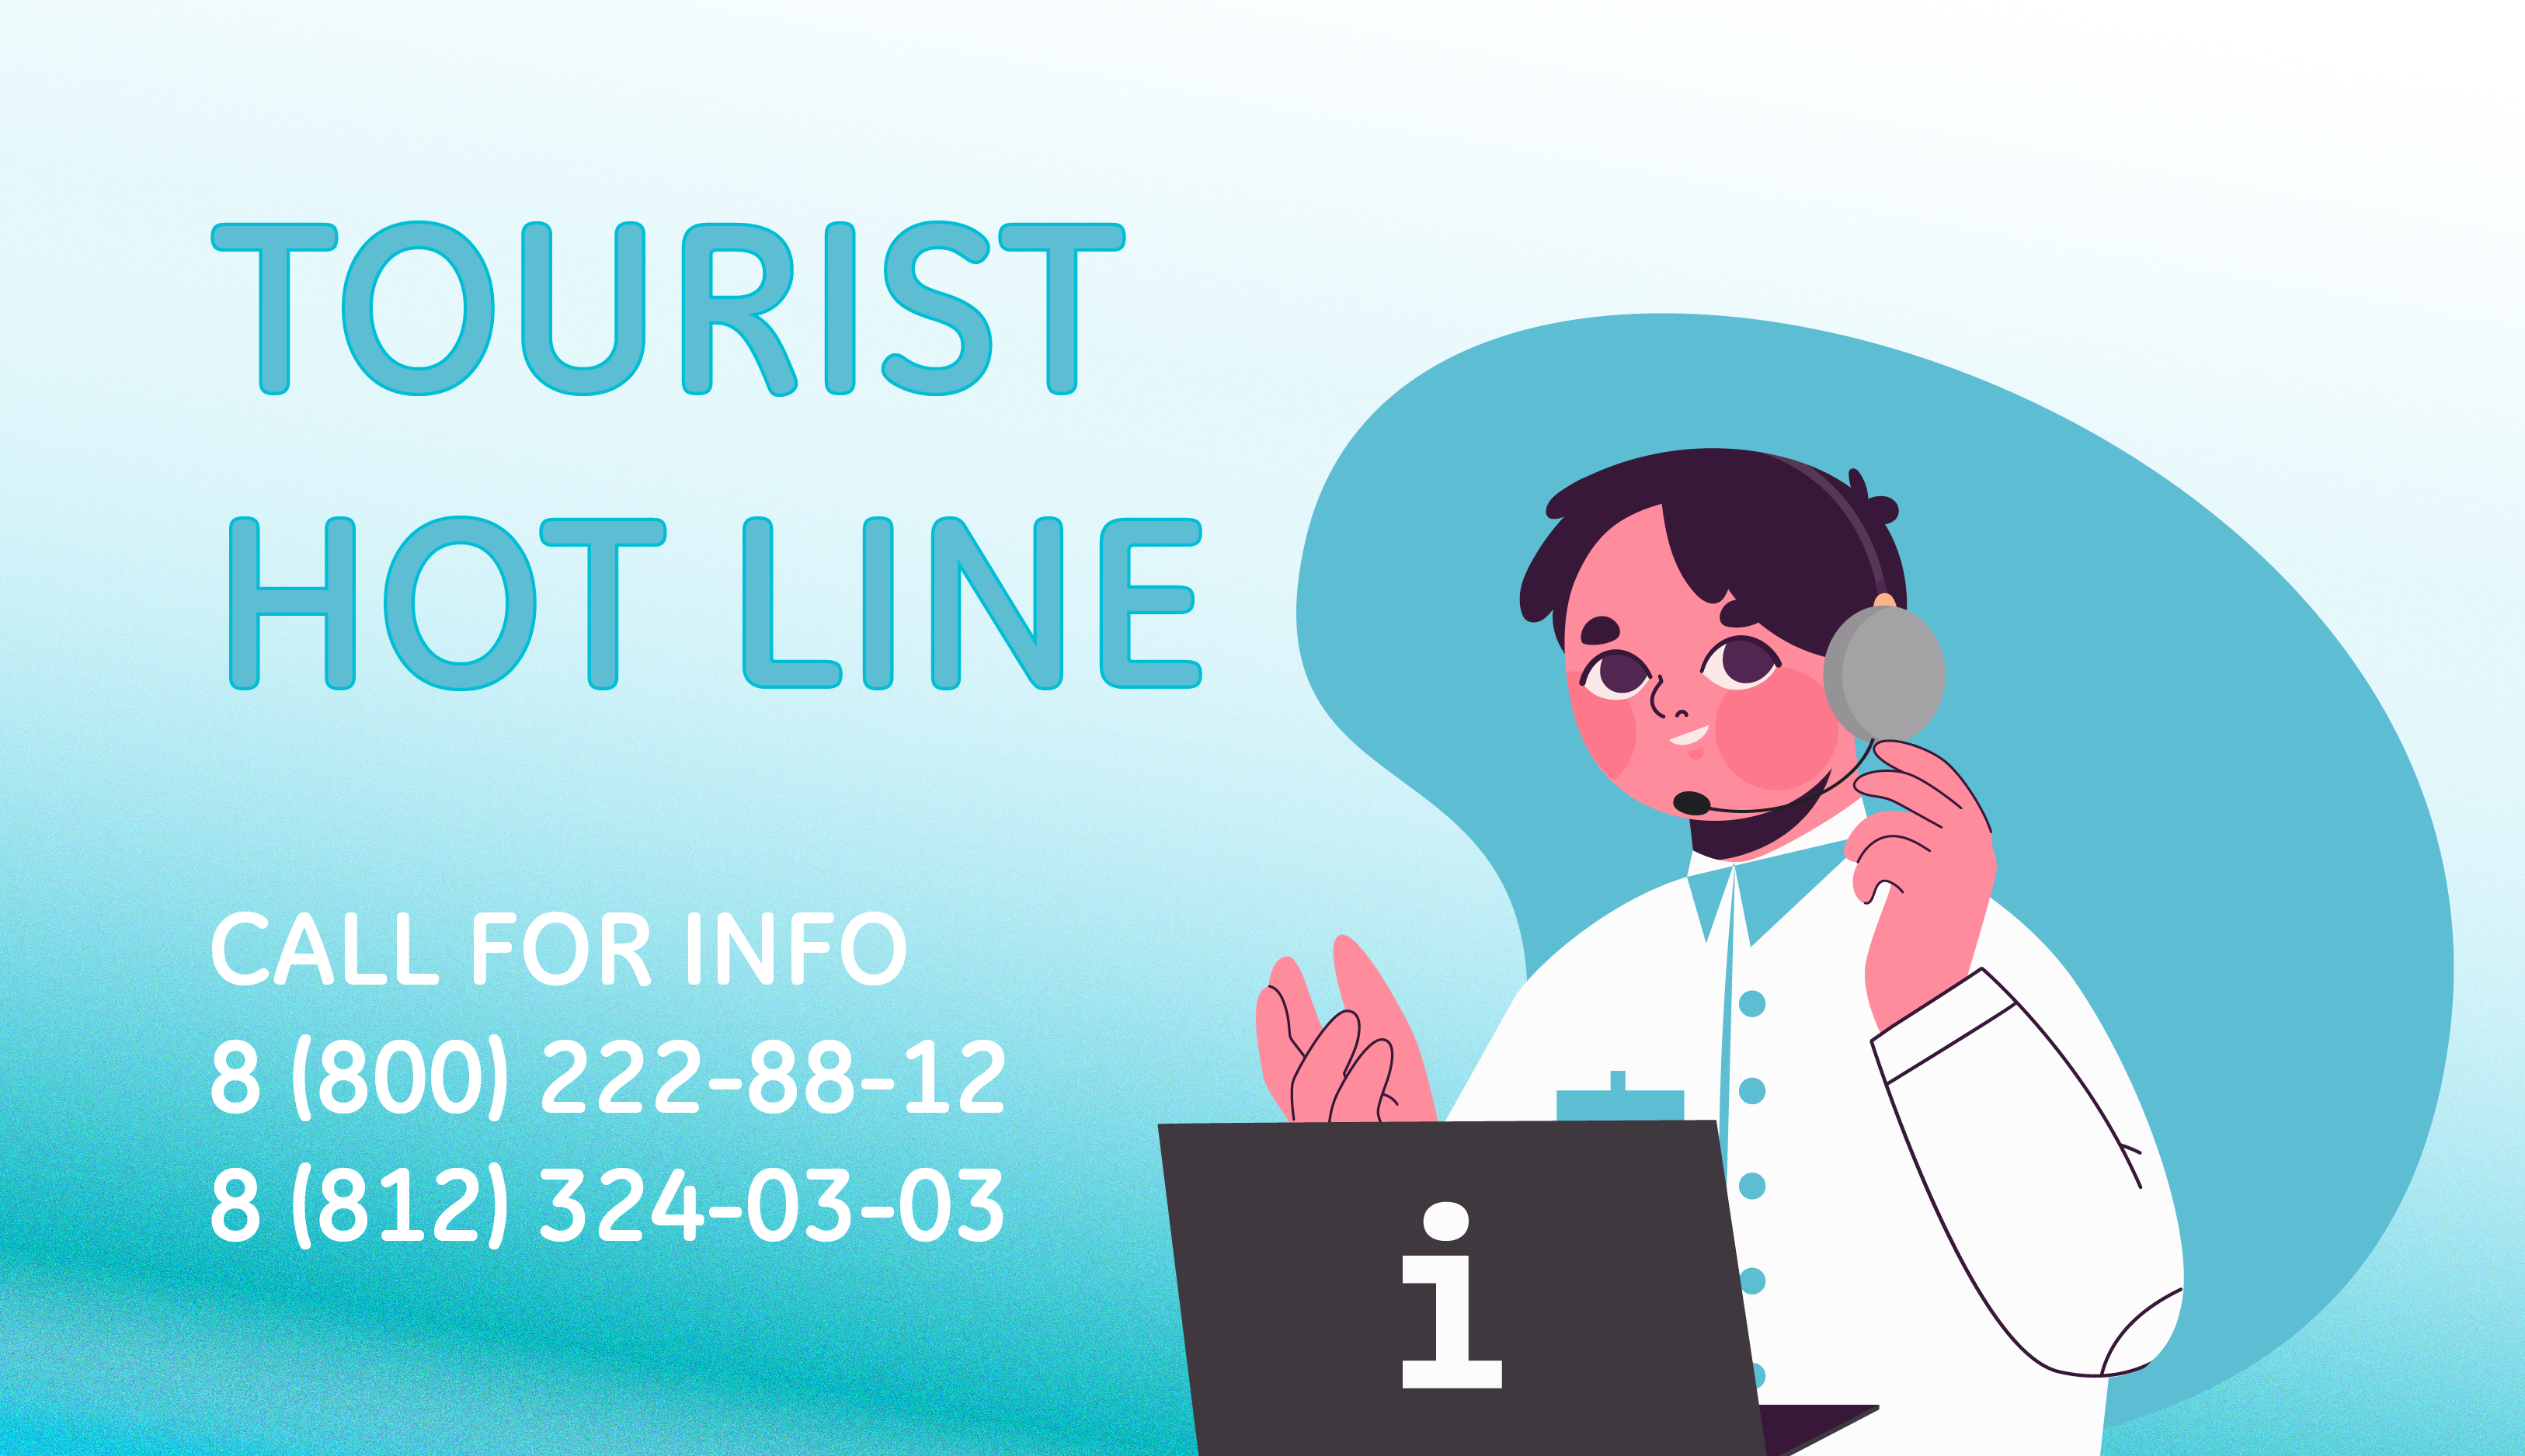 Tourist information contact center